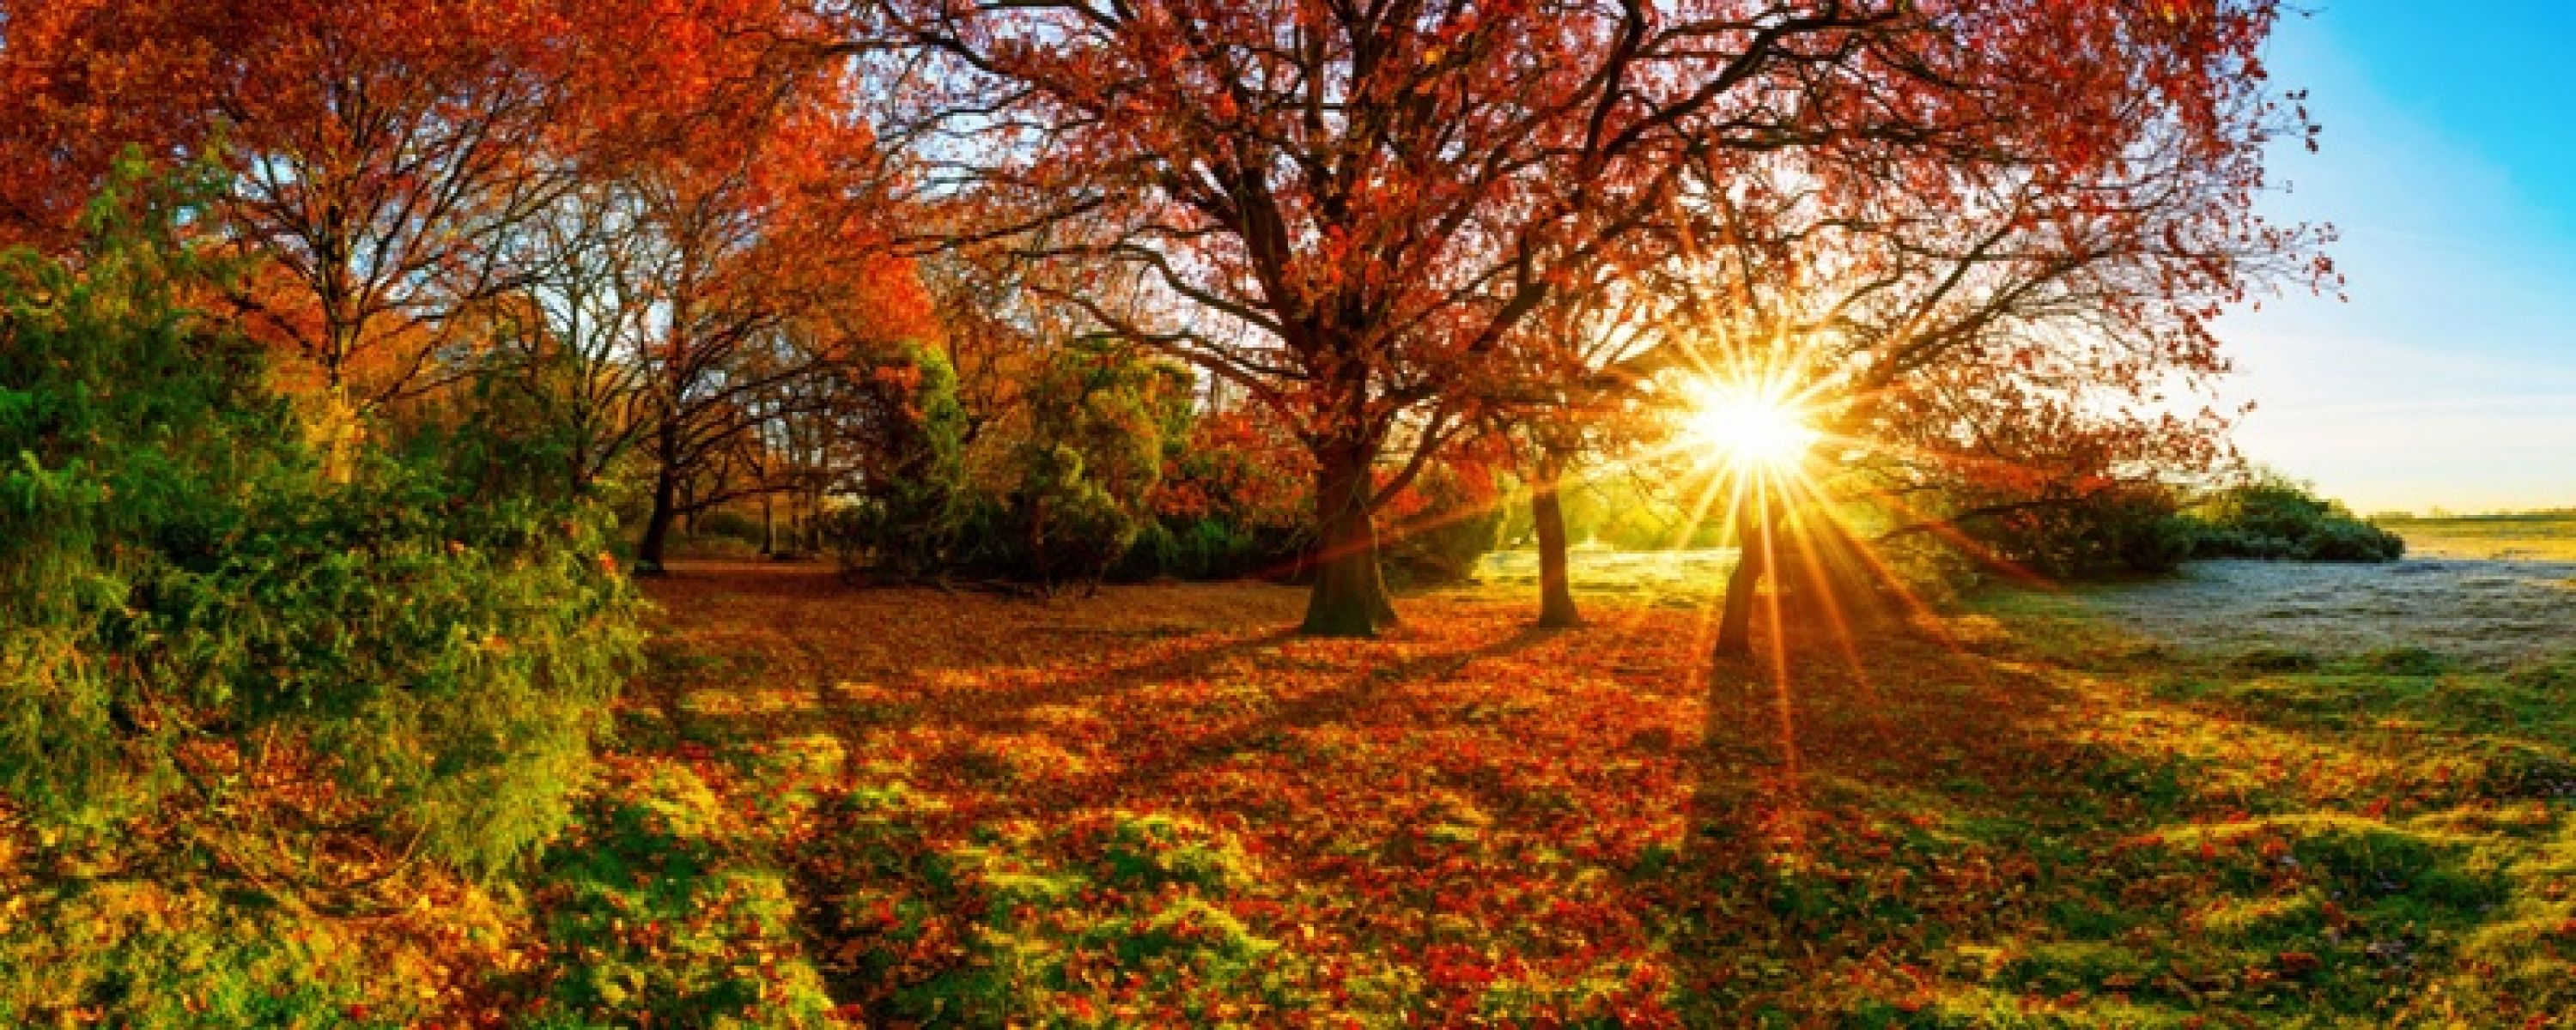 Wandbild "Herbstsonne"